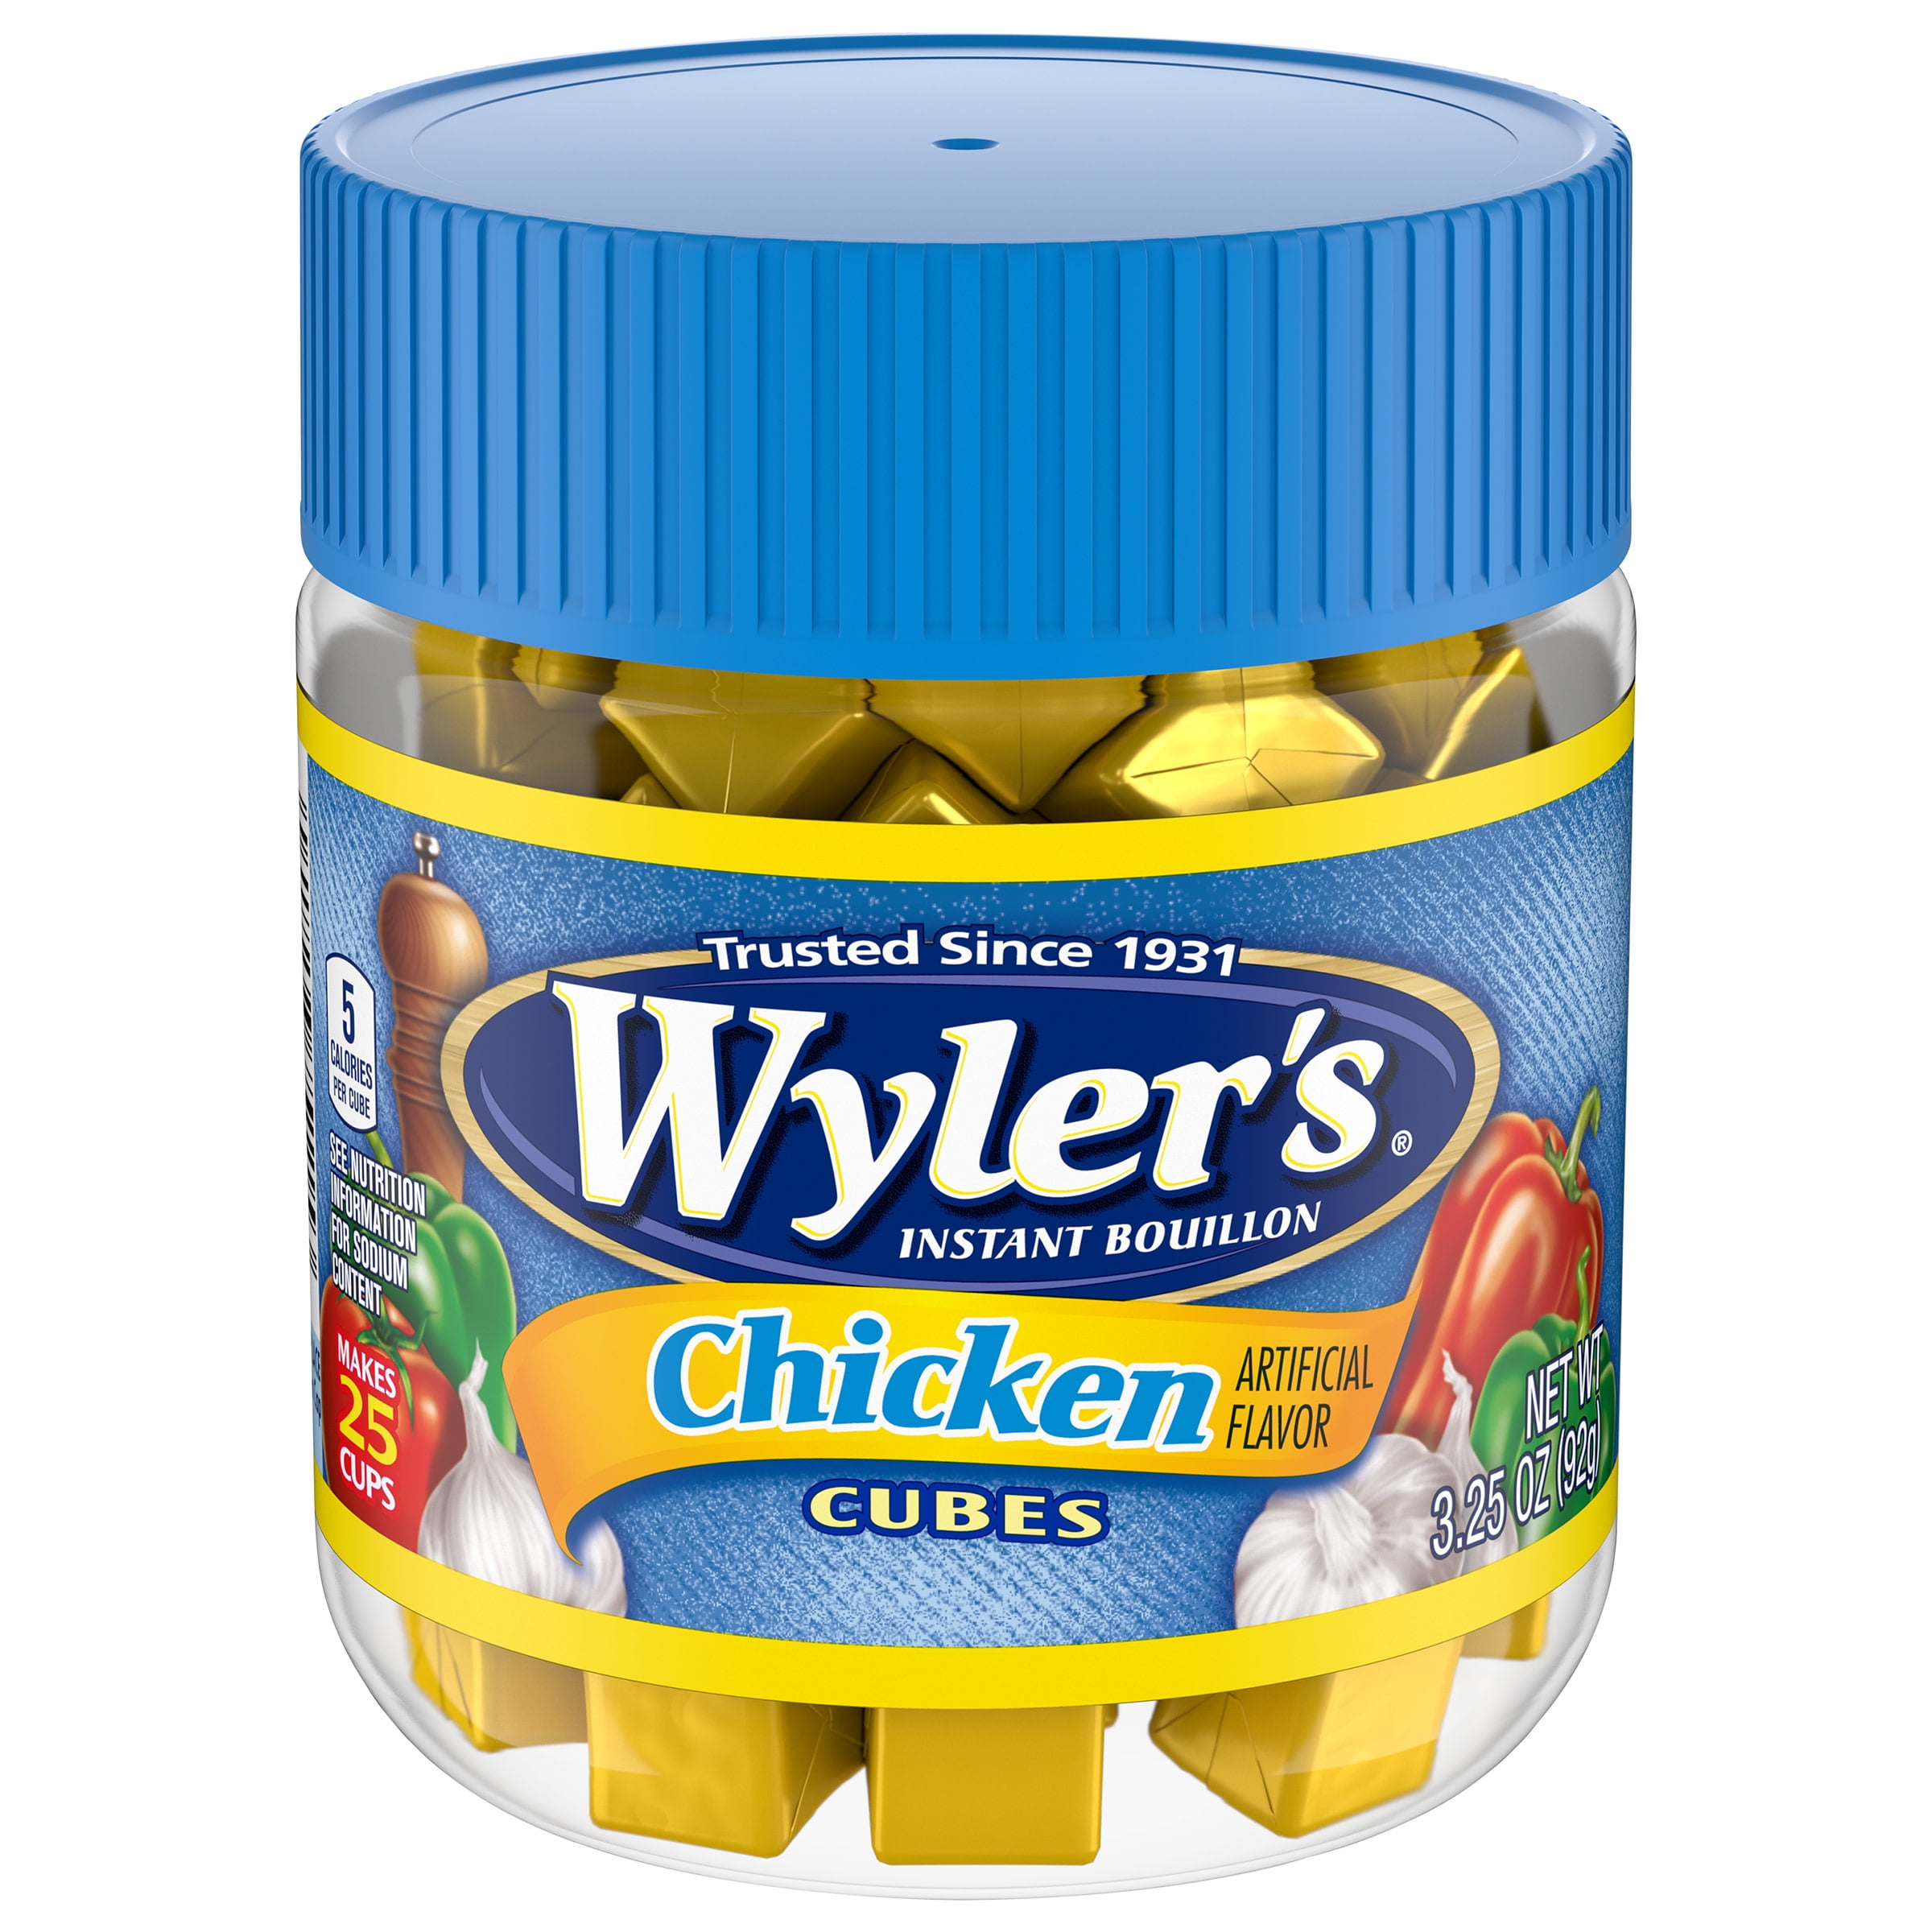 Wyler S Instant Bouillon Chicken Flavored Cubes 3 25 Oz Jar Walmart Com Walmart Com